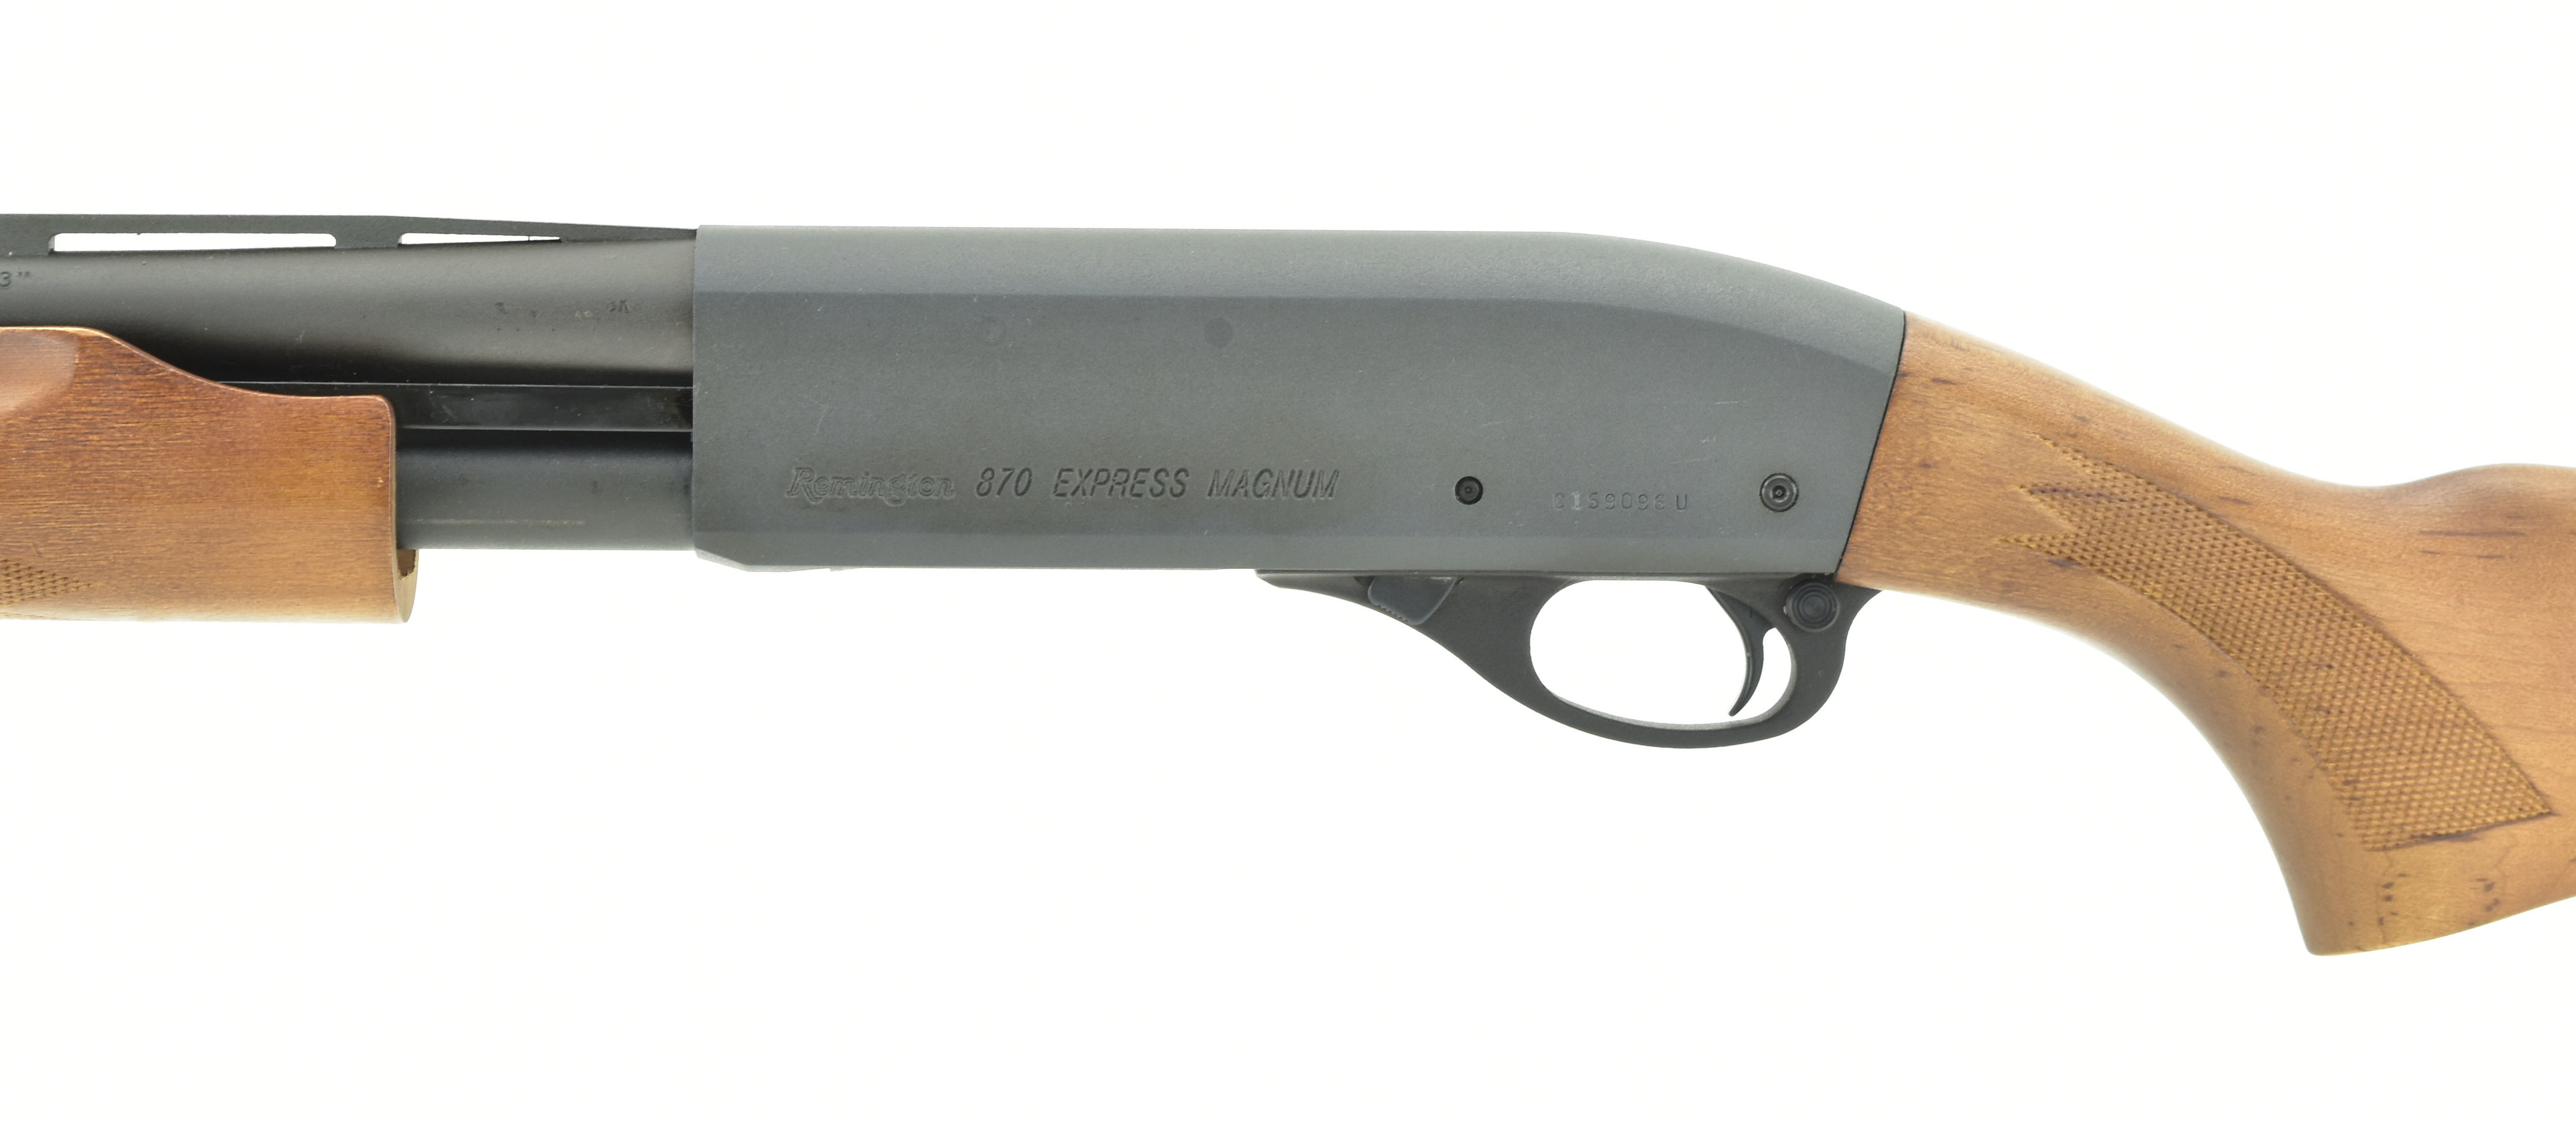 Remington 870 Express Magnum 12 Gauge ShotGun #D070412M, 49% OFF